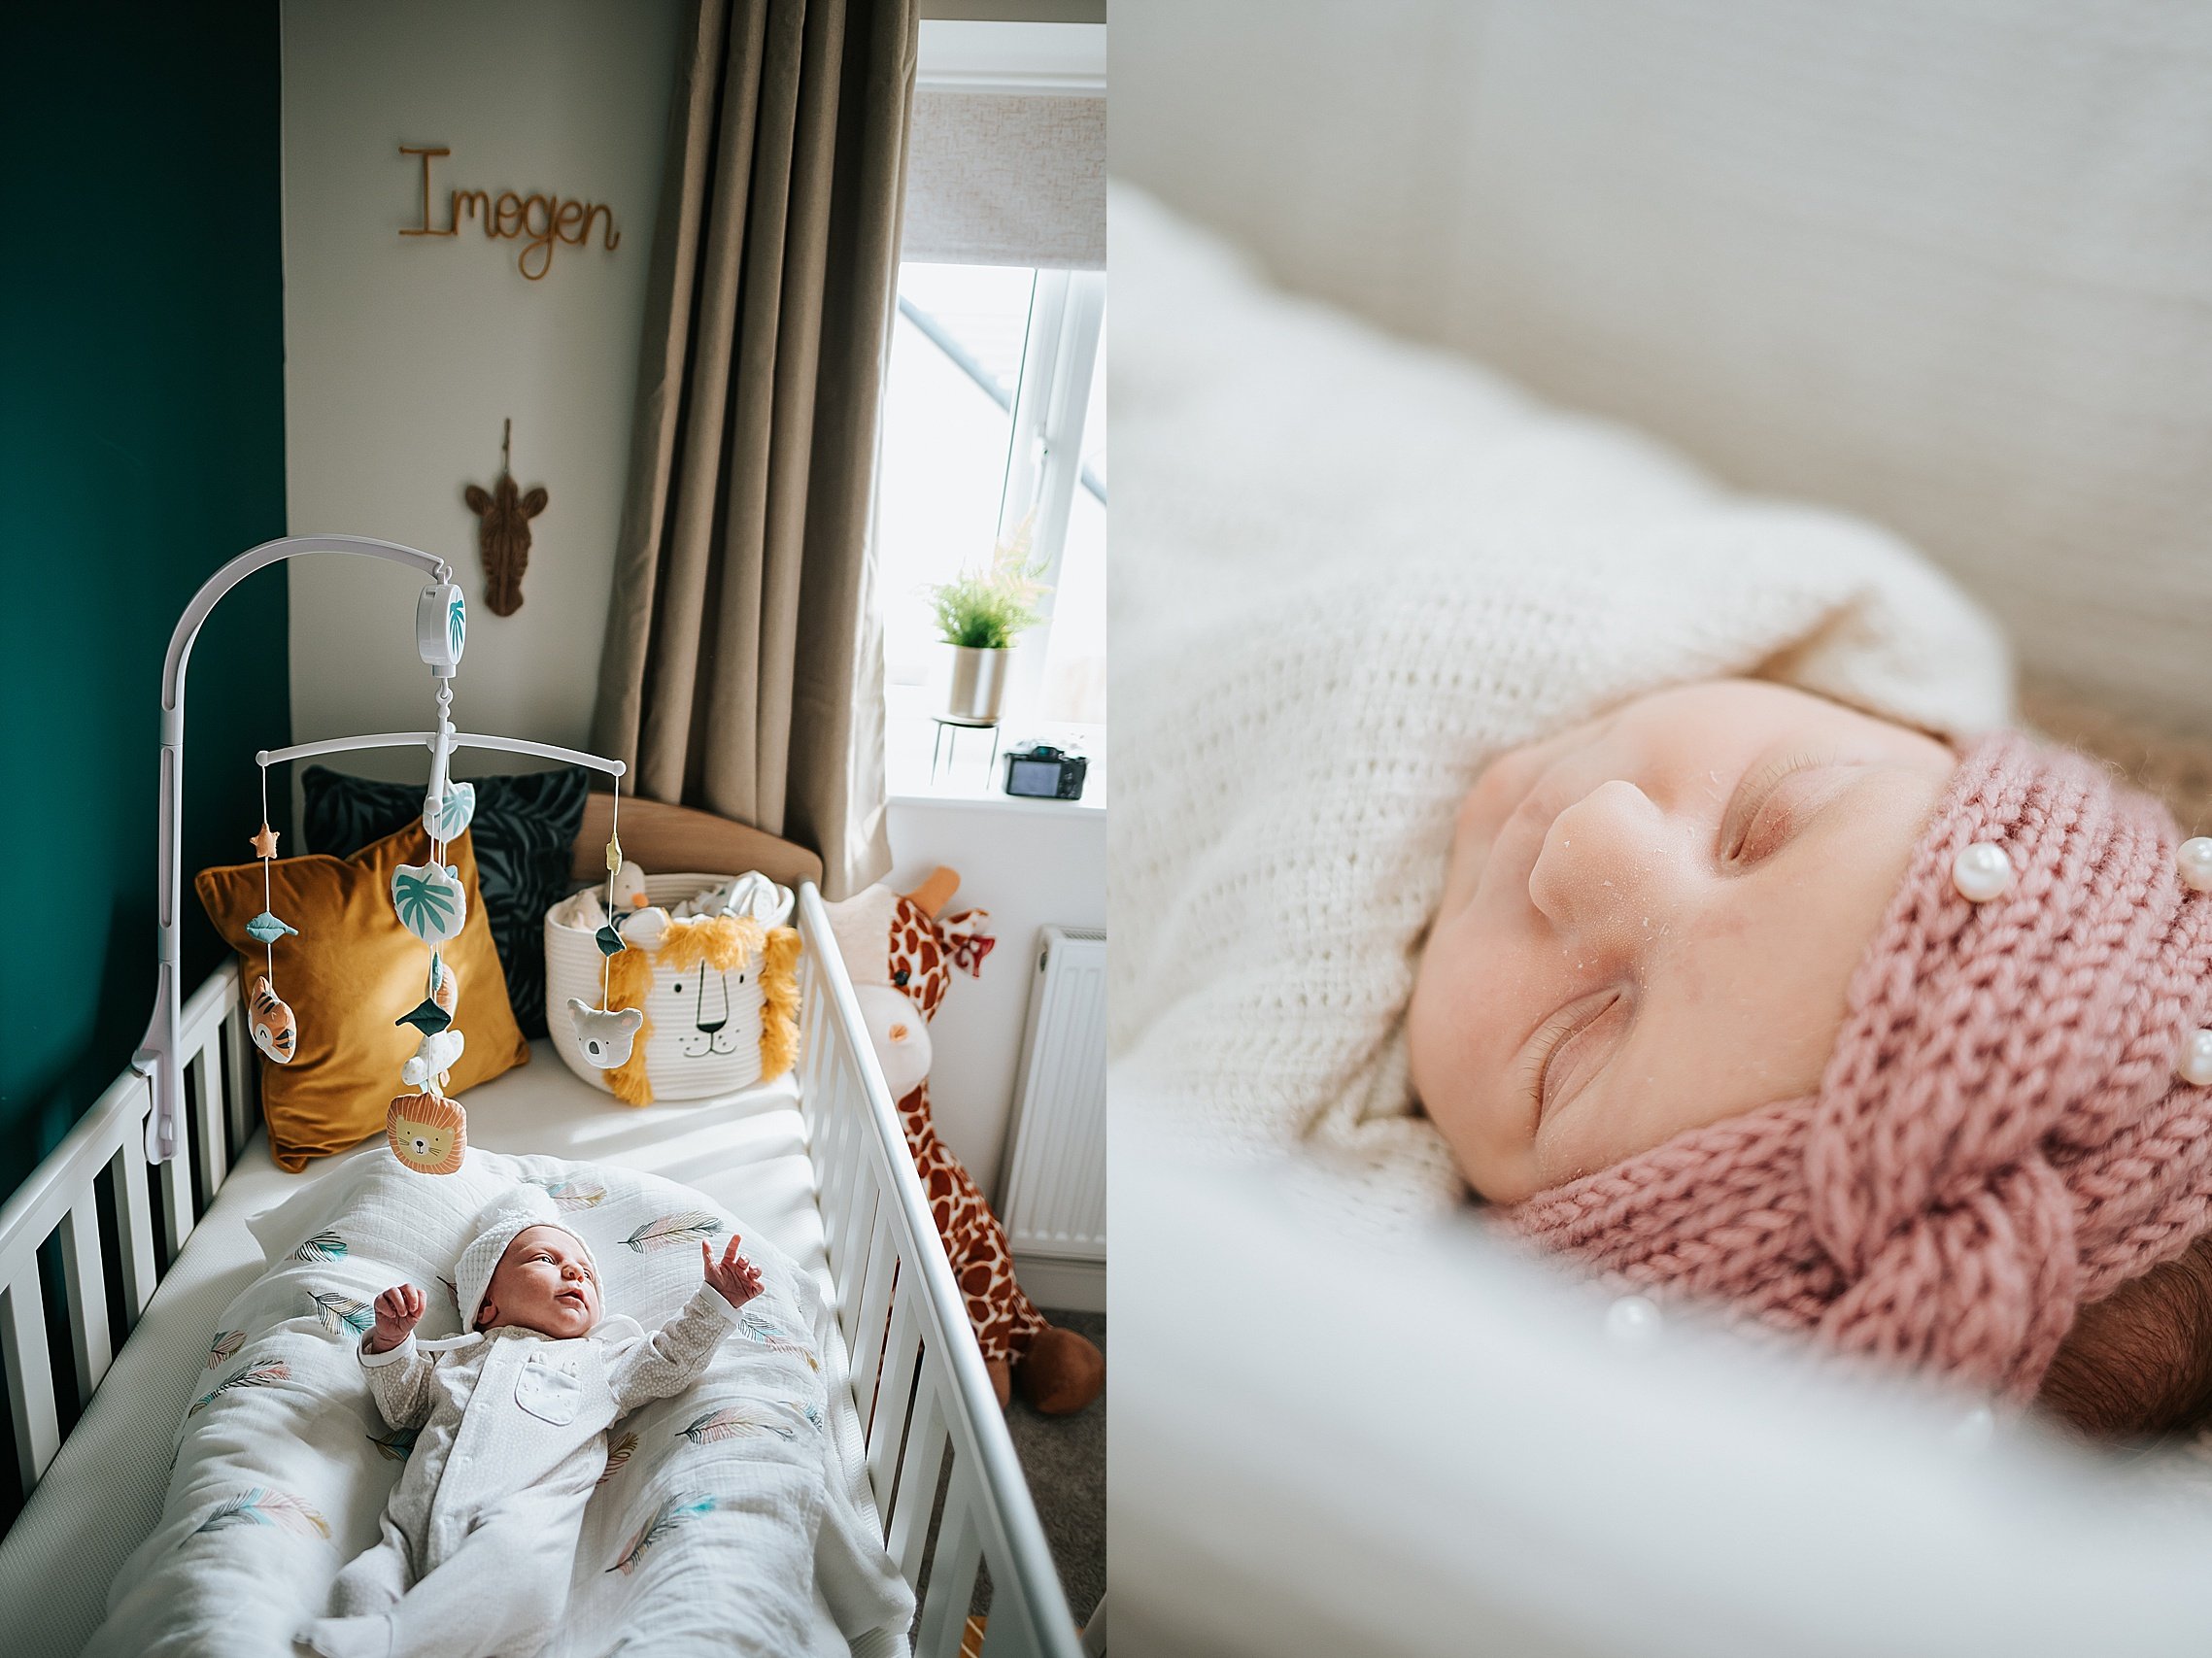 Imogen+newborn+lacashire+photography+photographer+lifestyle+baby_0044.jpg